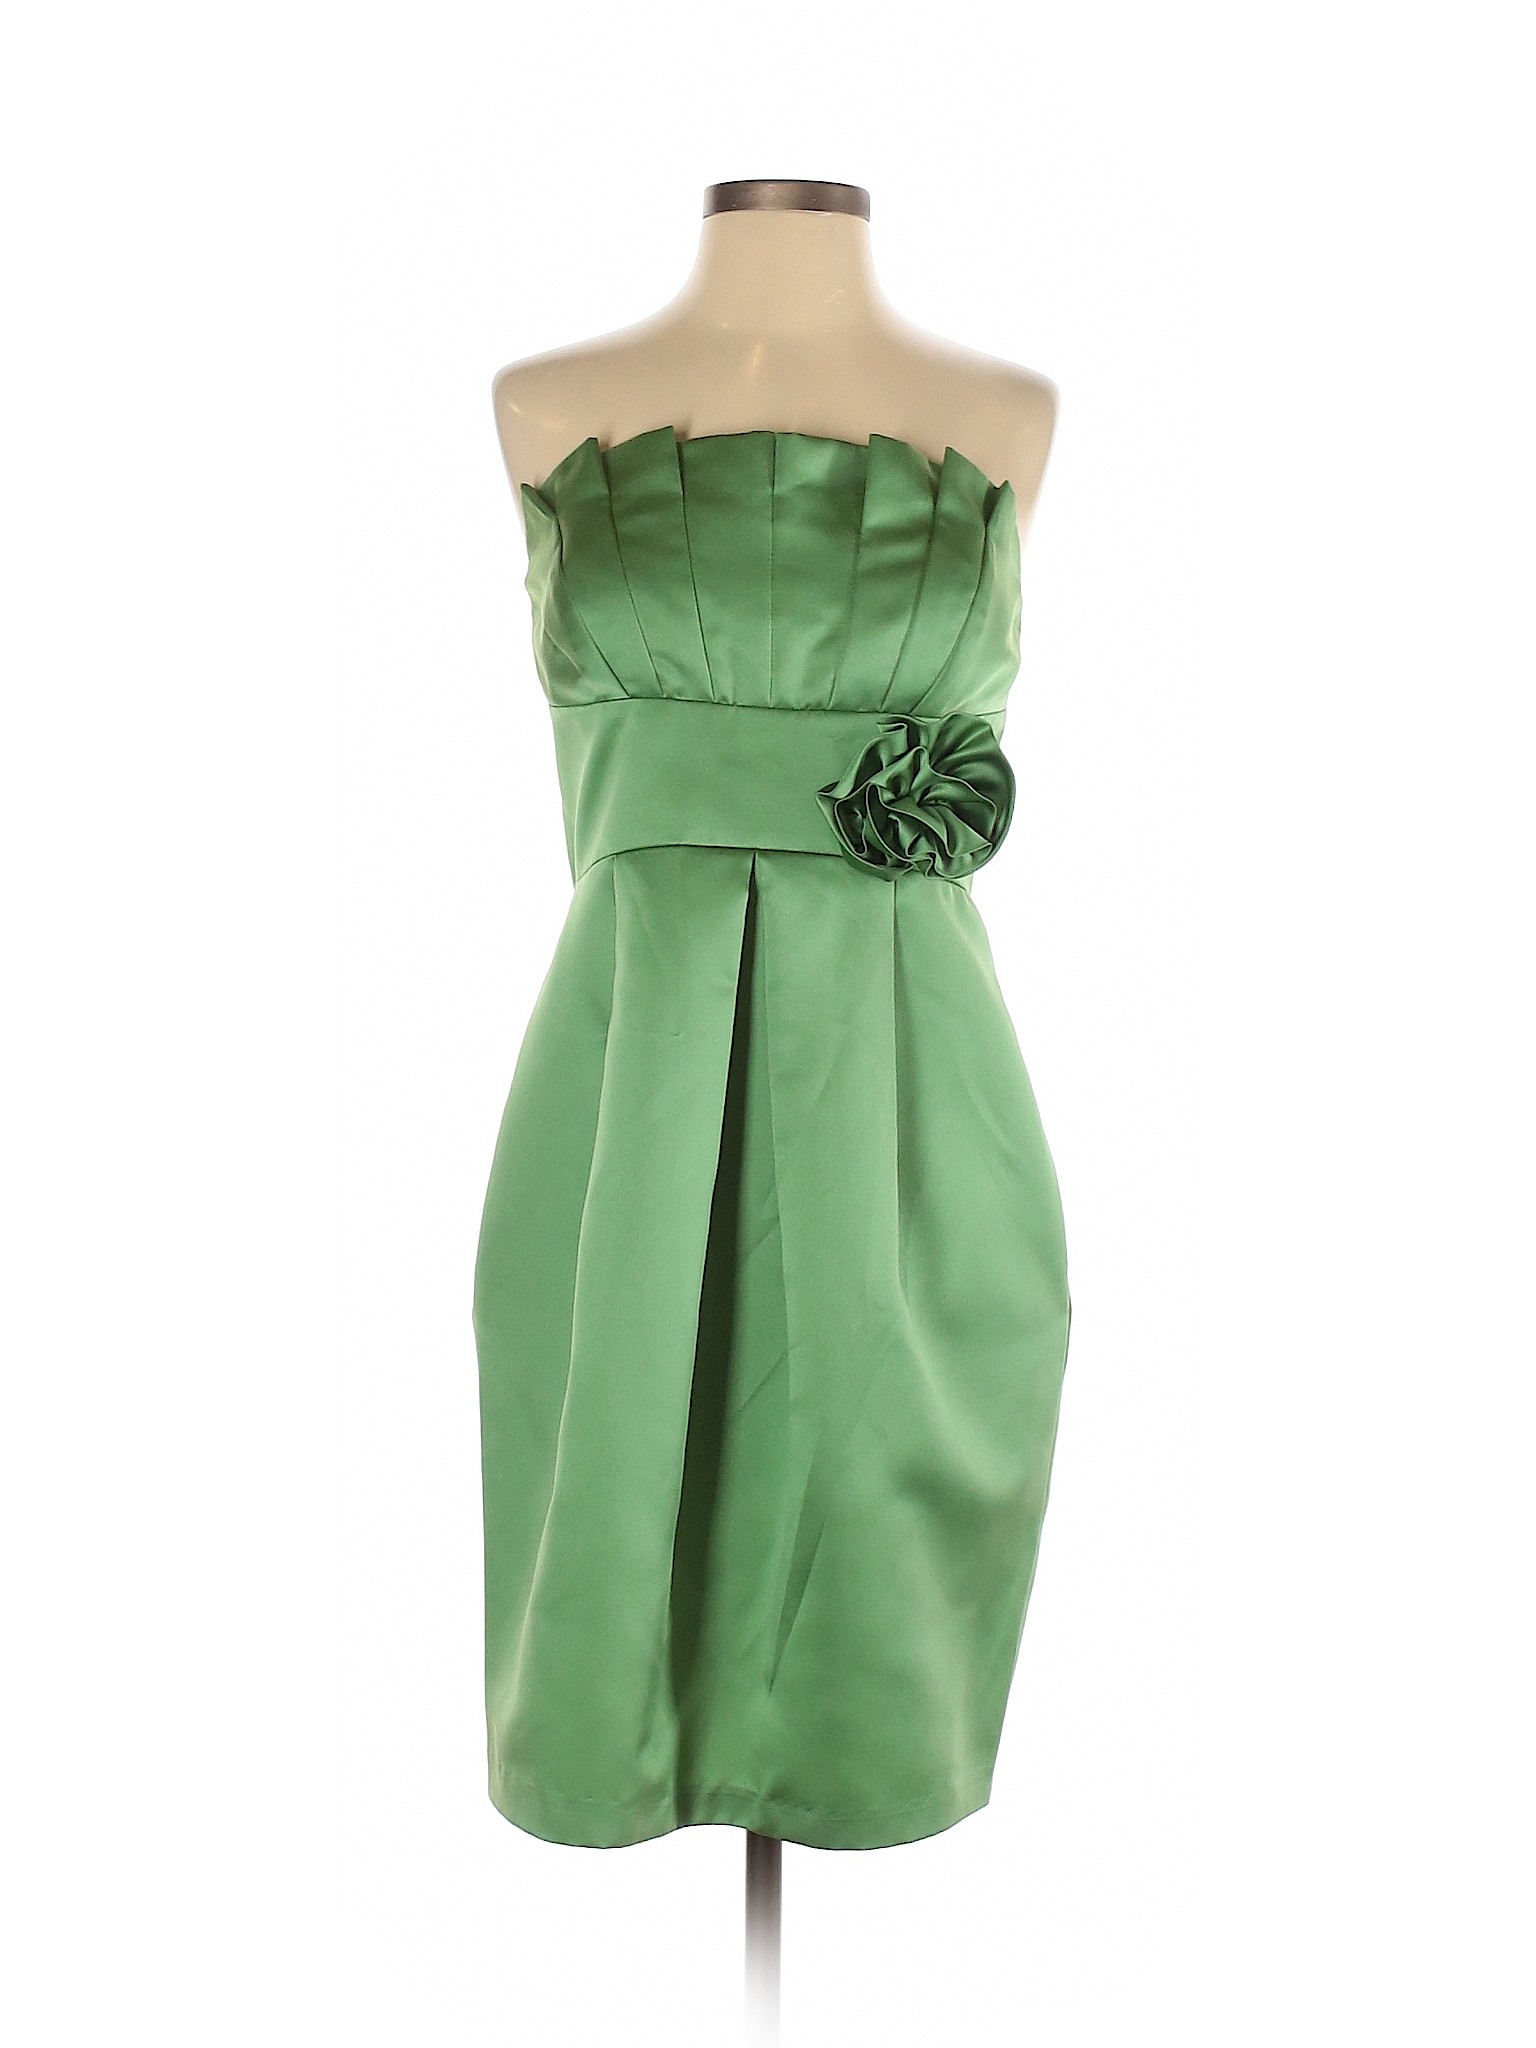 David's Bridal Women Green Cocktail Dress 8 | eBay